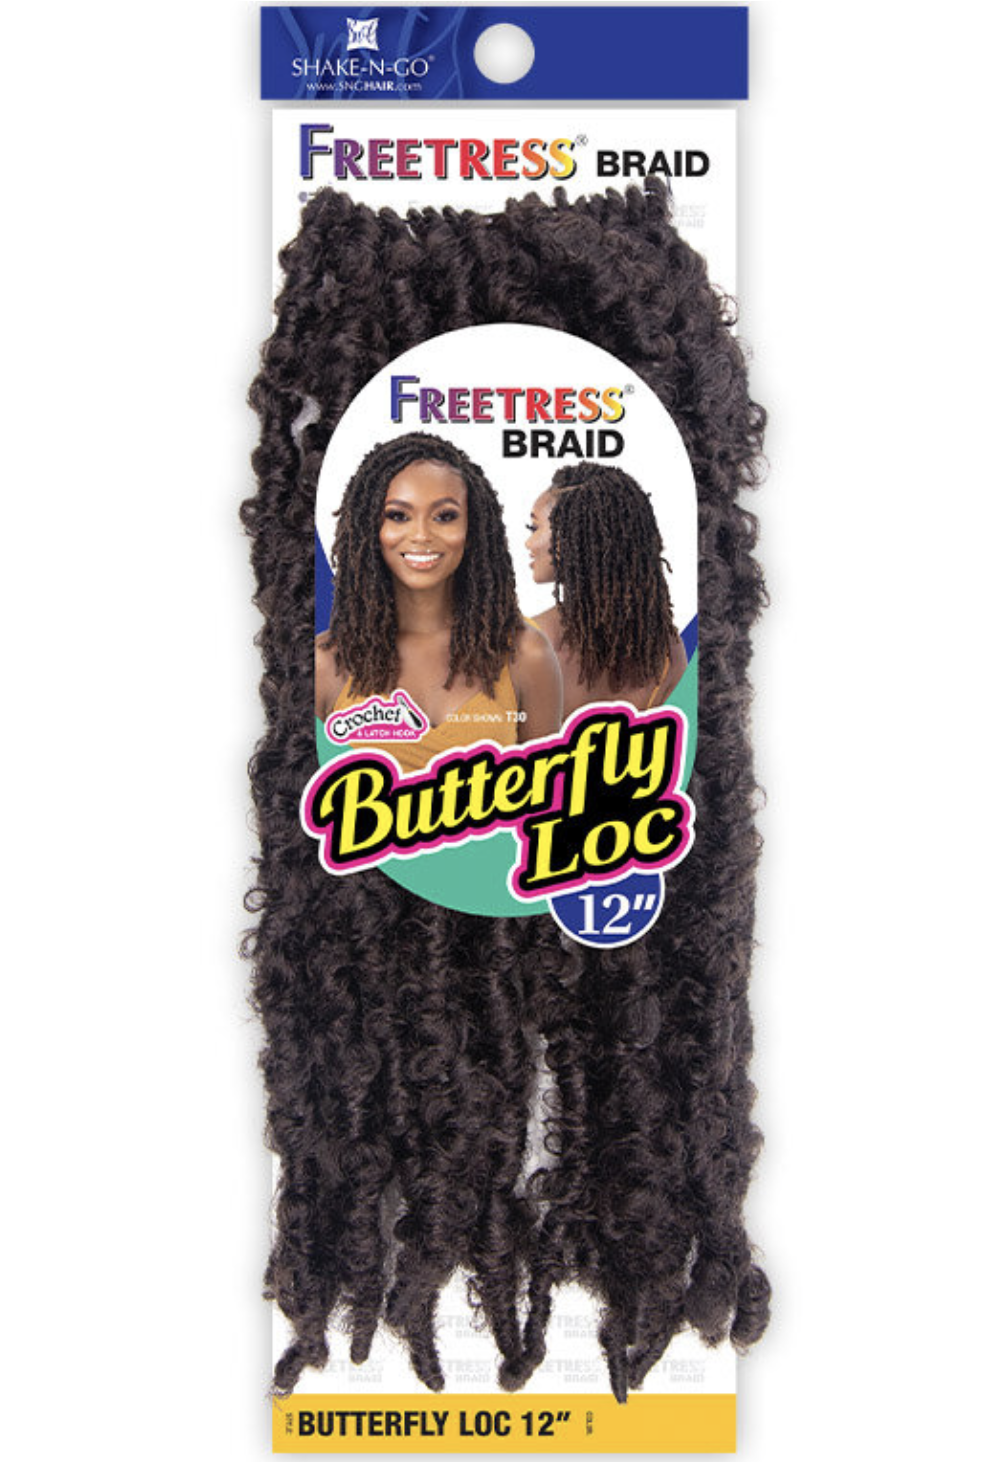 Shake N Go FreeTress Crochet Braids Butterfly Loc 12 – BPolished